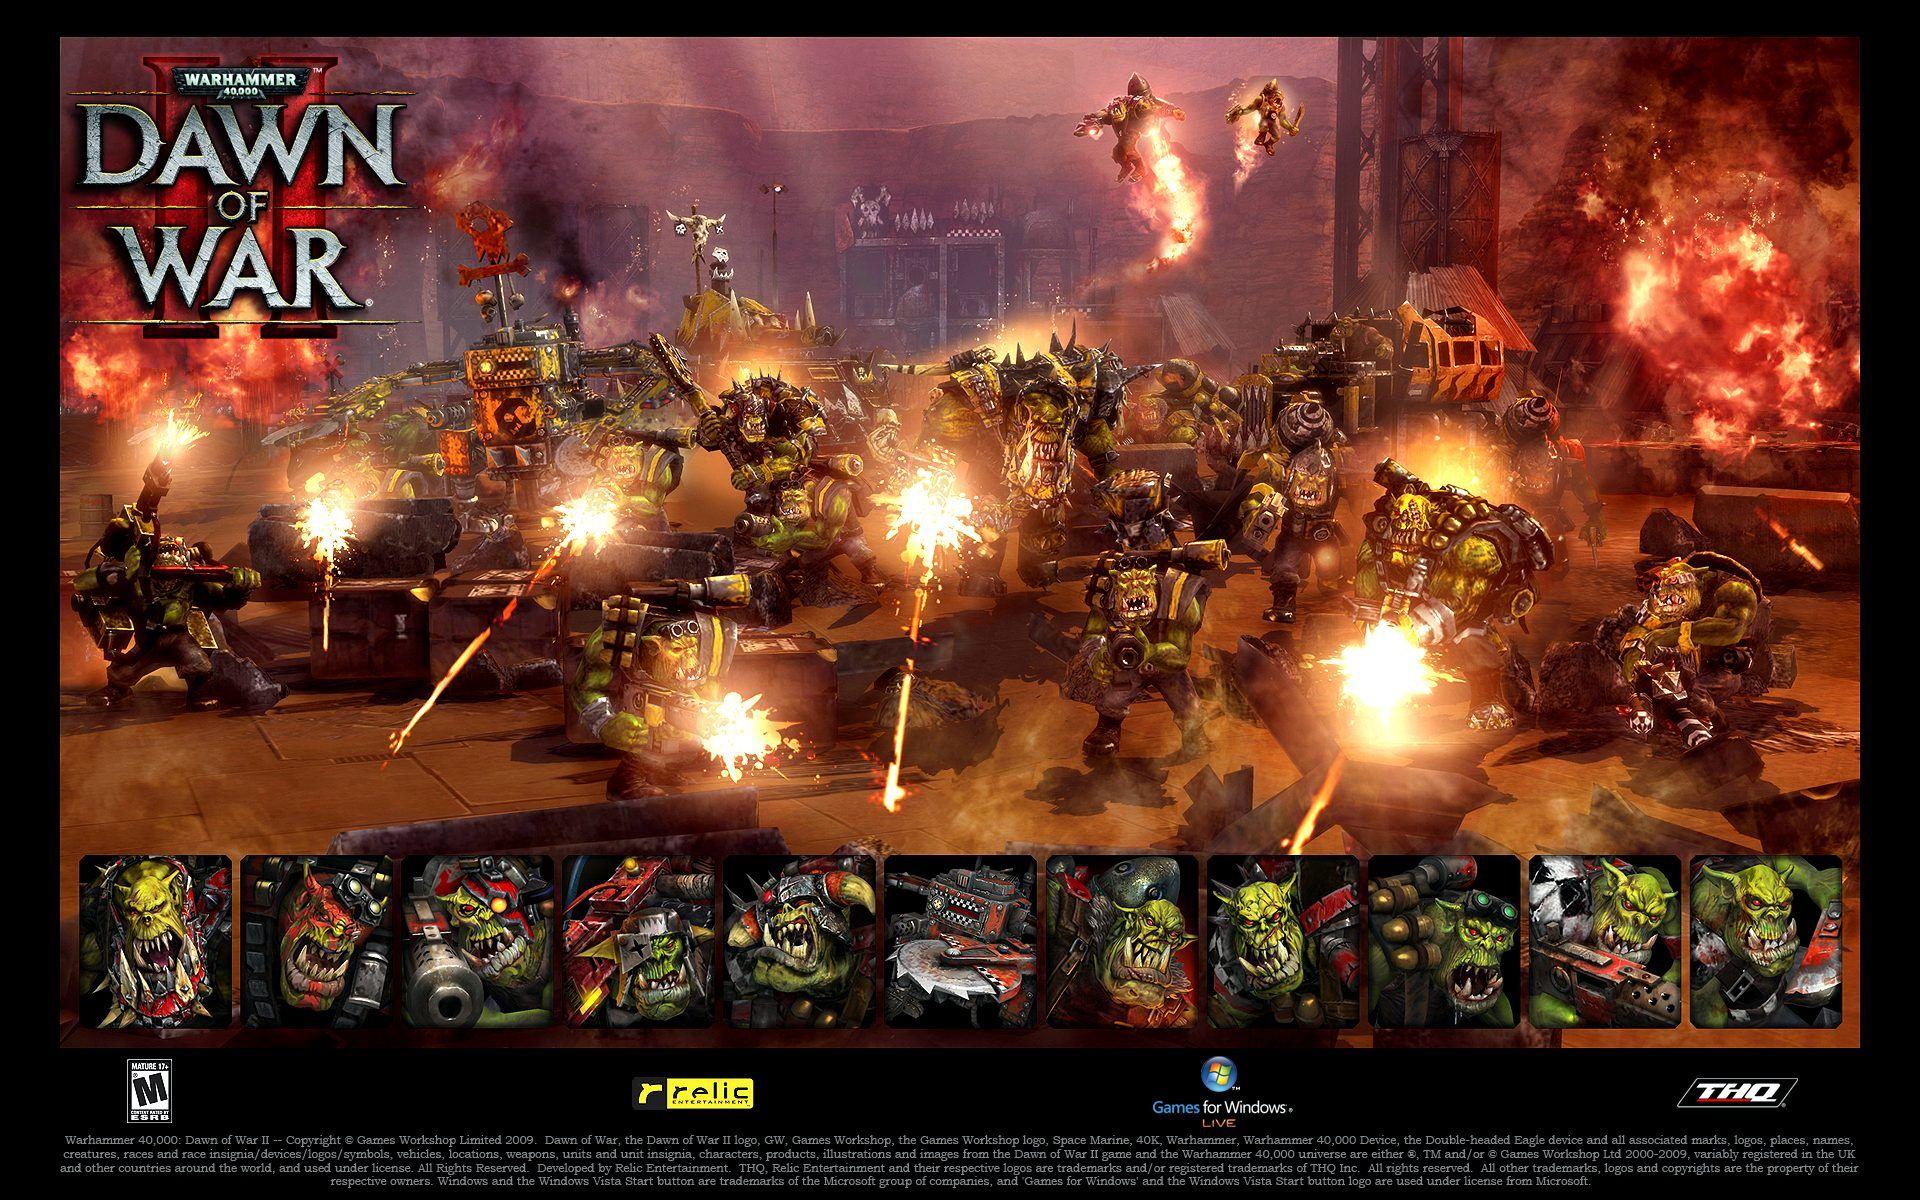 Warhammer 40K Wallpaper